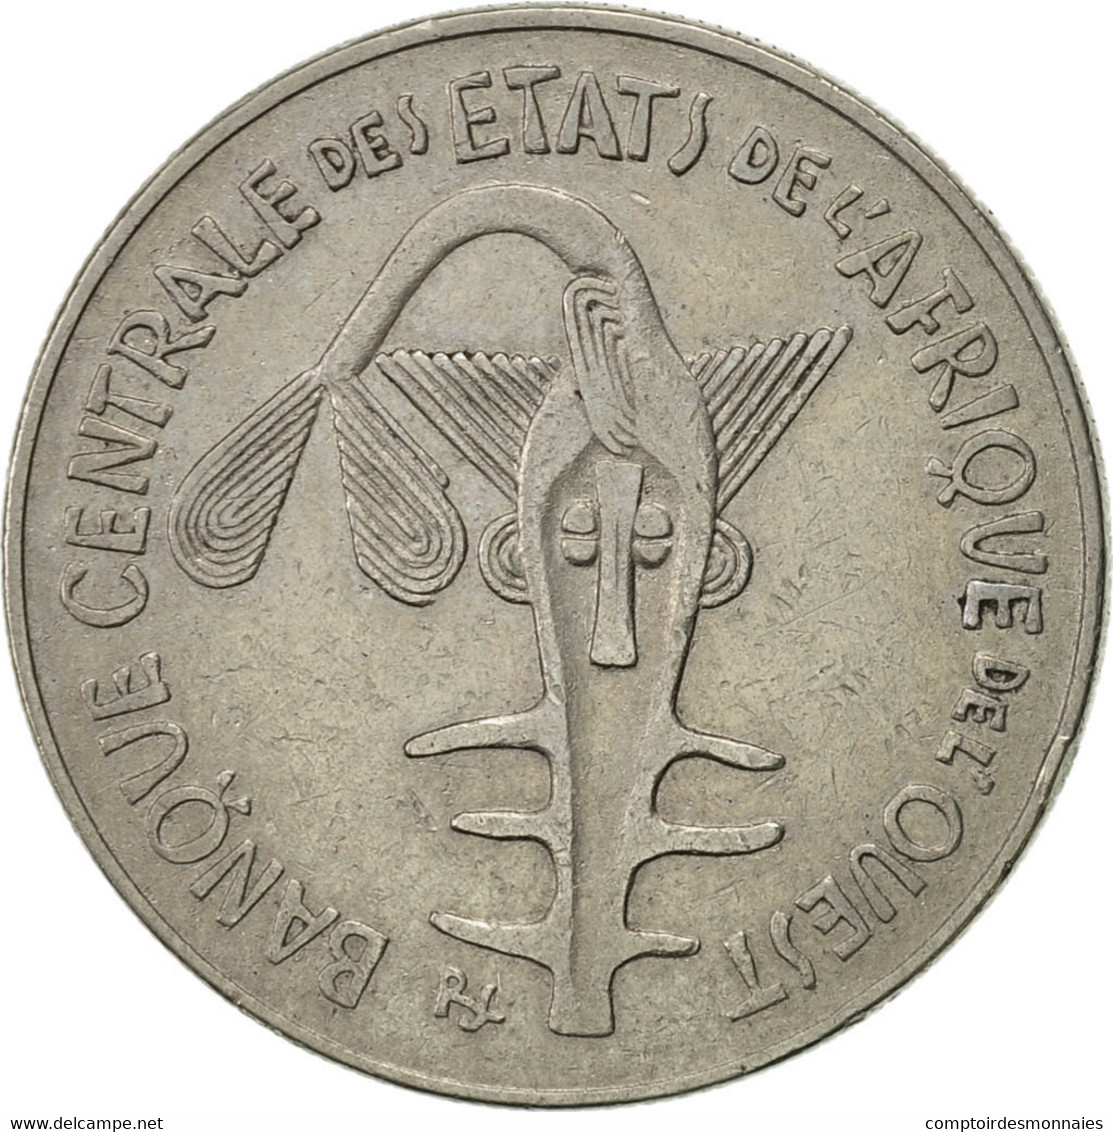 Monnaie, West African States, 100 Francs, 1981, Paris, TTB+, Nickel, KM:4 - Ivory Coast